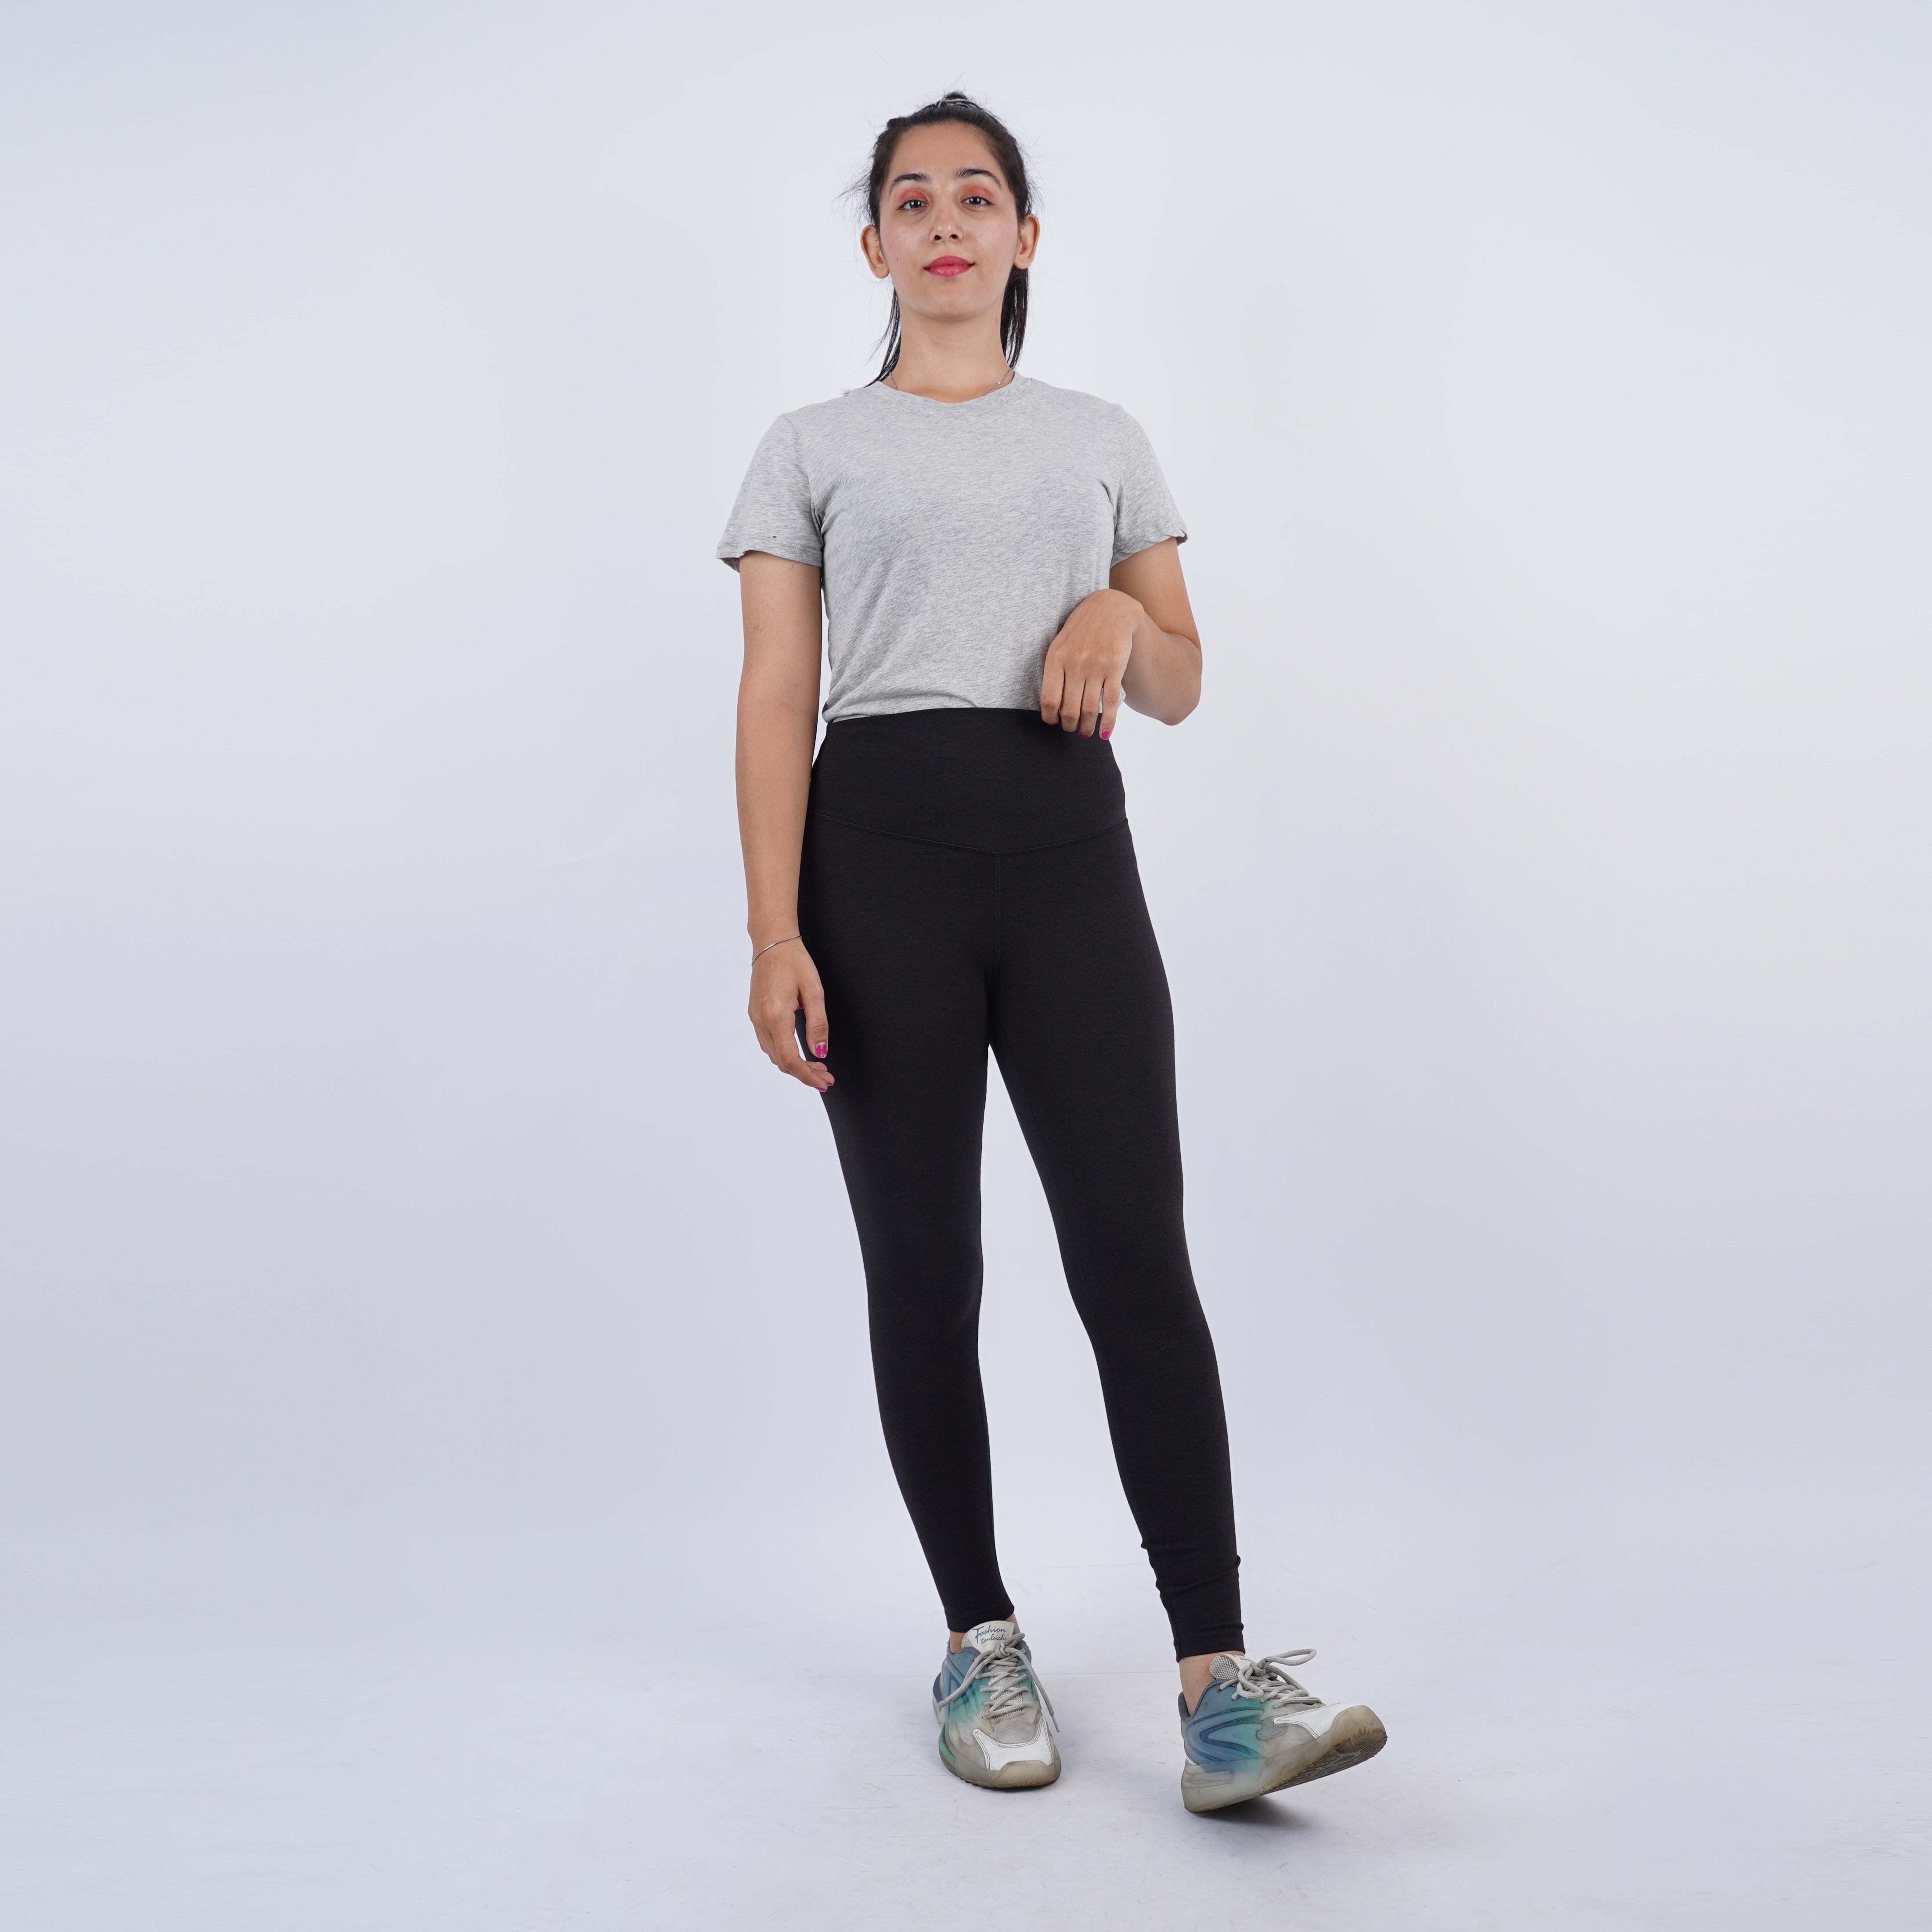 Legging Sport Wanita Bahan Adem Tersedia 3 Warna [CG-OLL 01B]